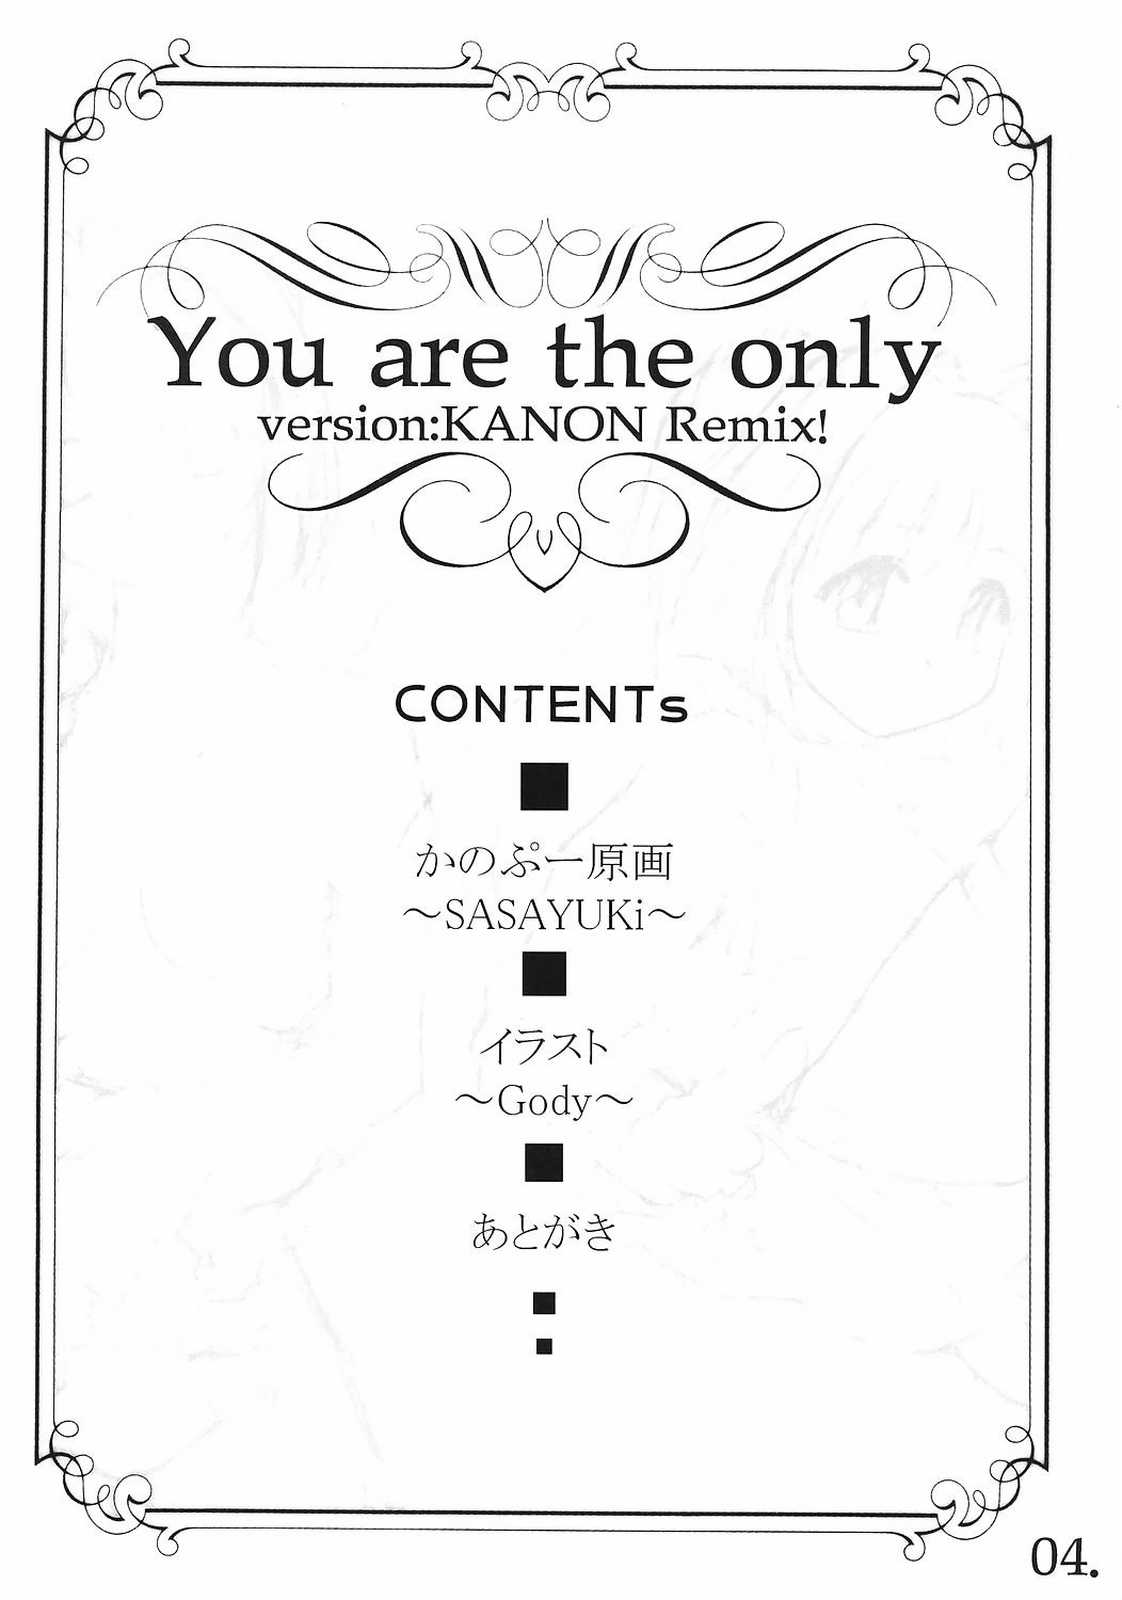 (Cレヴォ31) [G-Power! (Gody, SASAYUKi)] You are the only version:KANON remix (カノン)